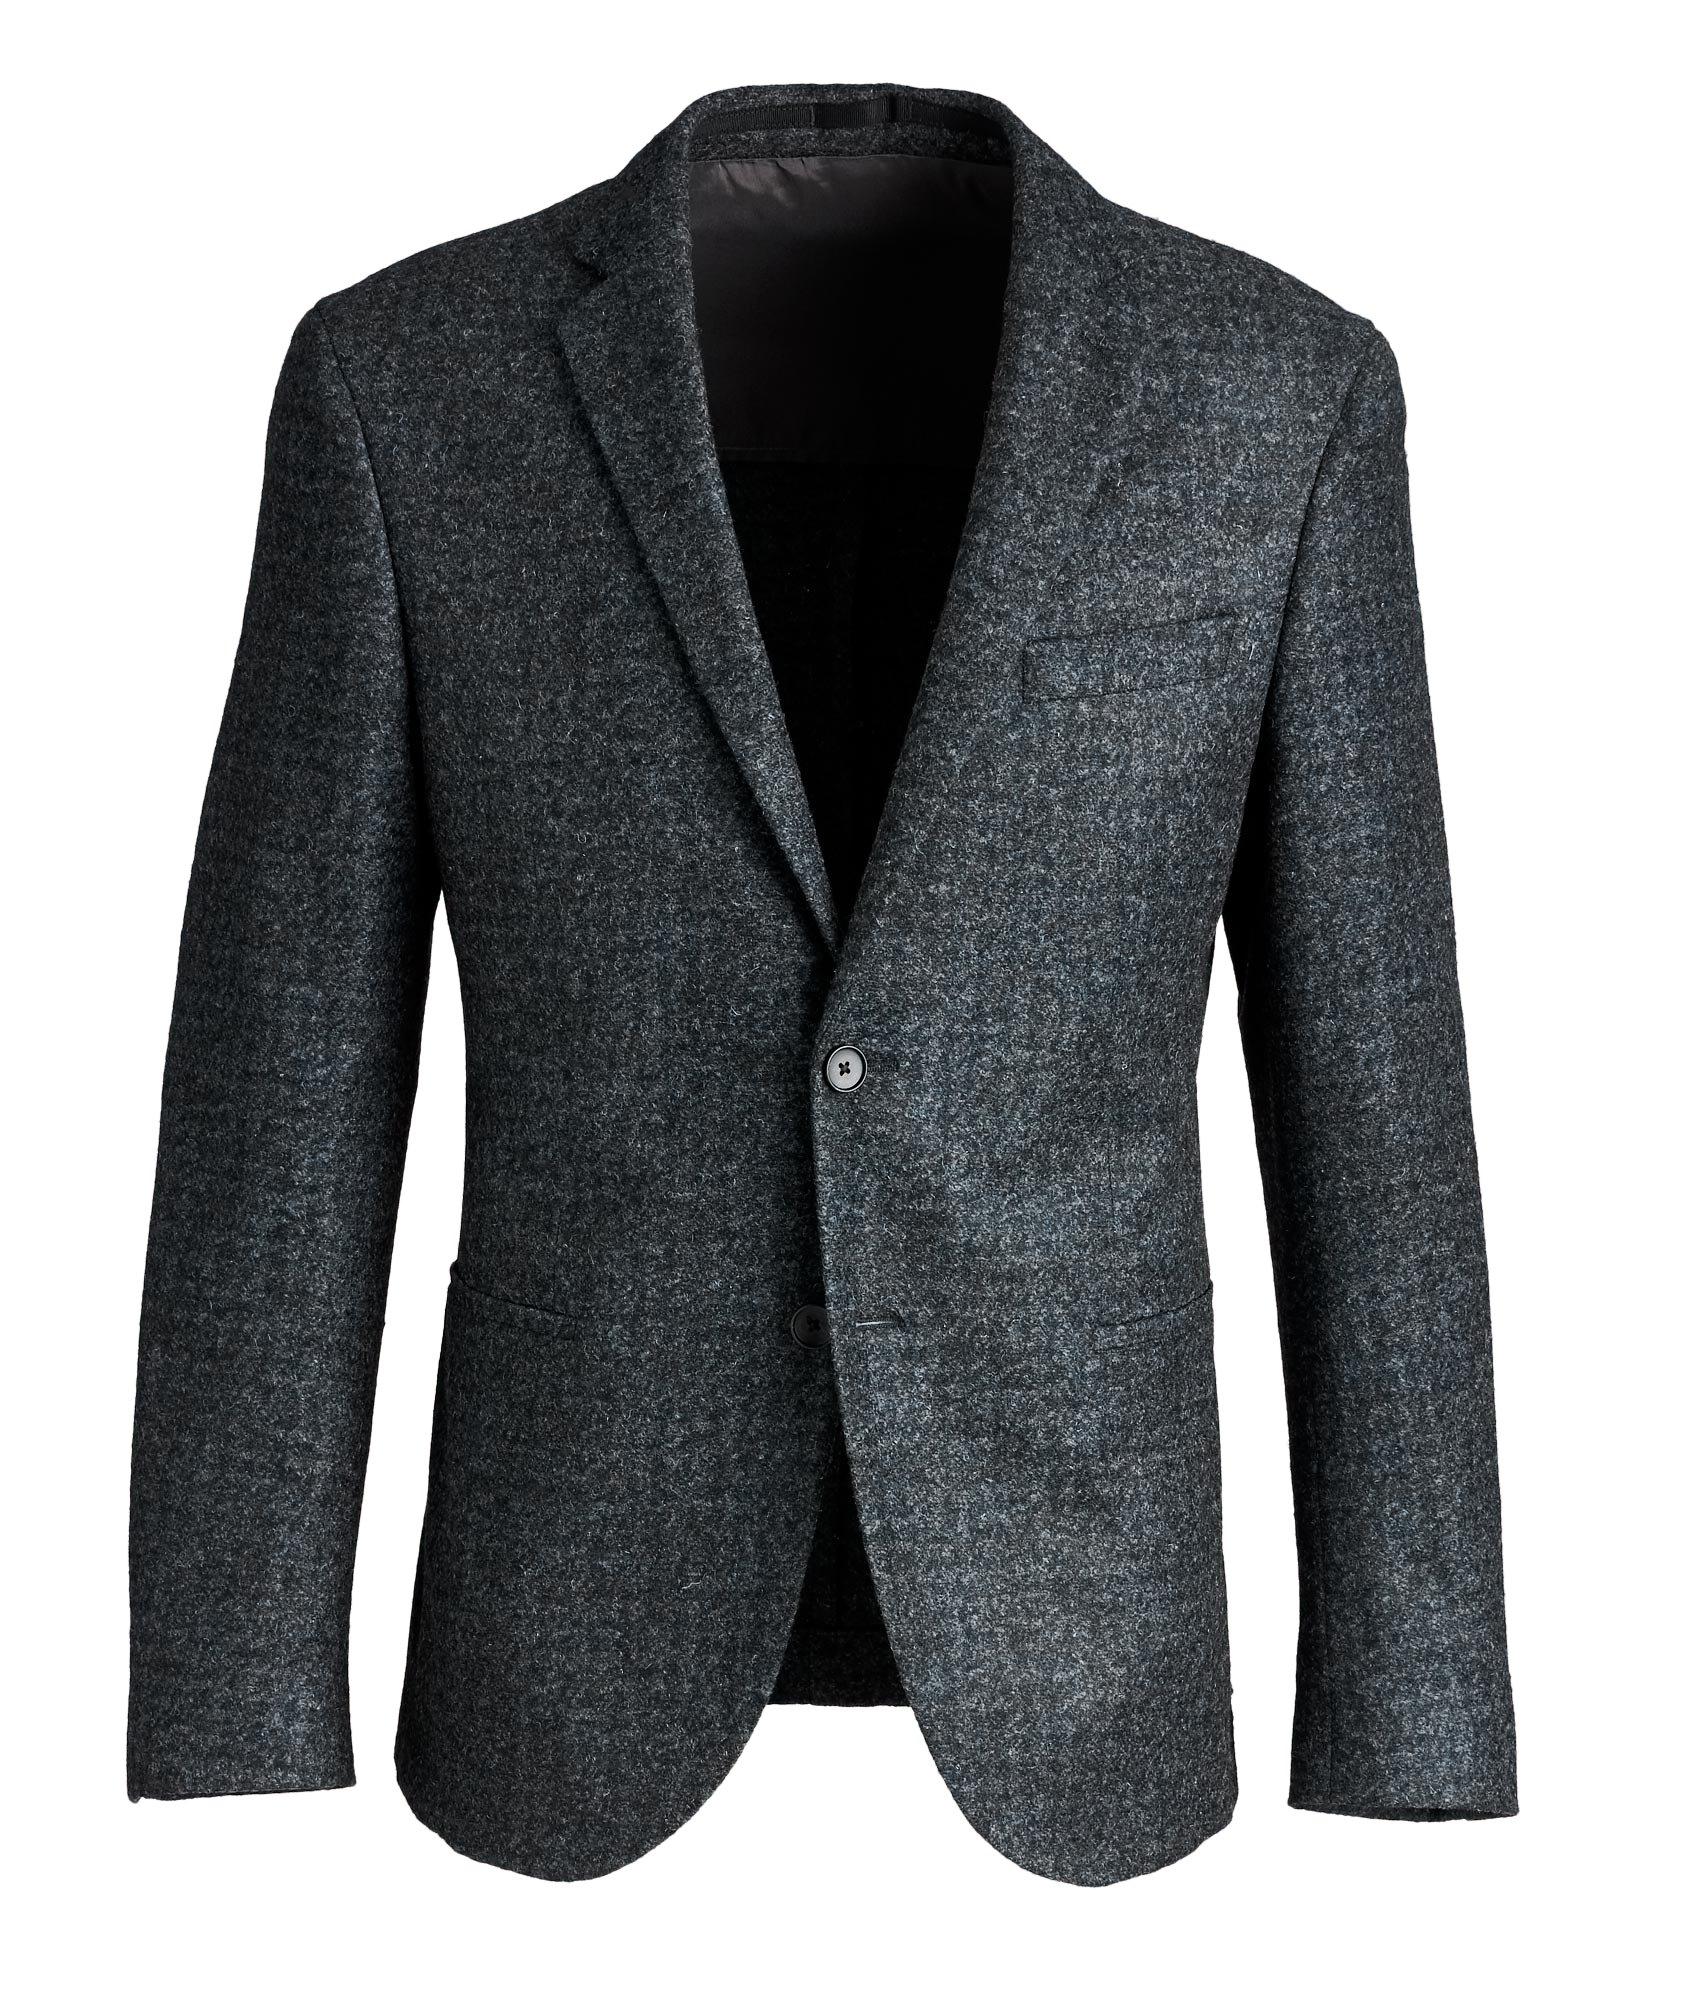 Norwin4 Textured Wool-Blend Sports Jacket image 0